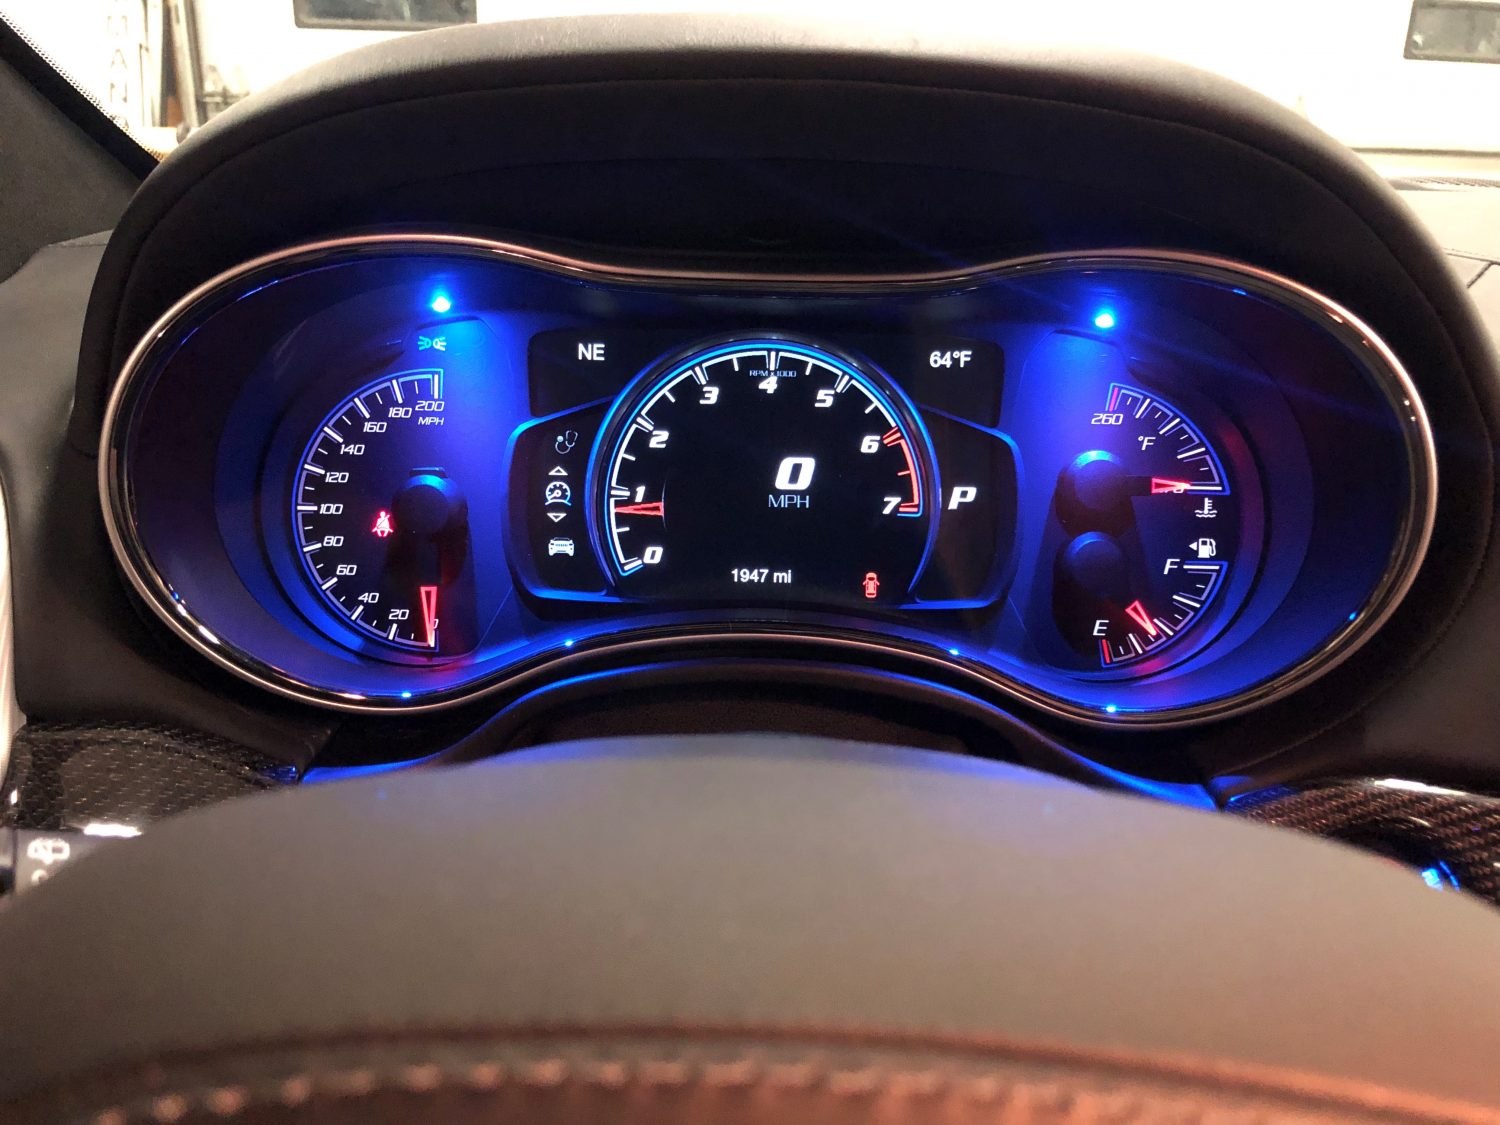 Custom K40 Police Radar Detector Alert LED's Installed on 2018 Jeep Trackhawk in Milwaukee, WI